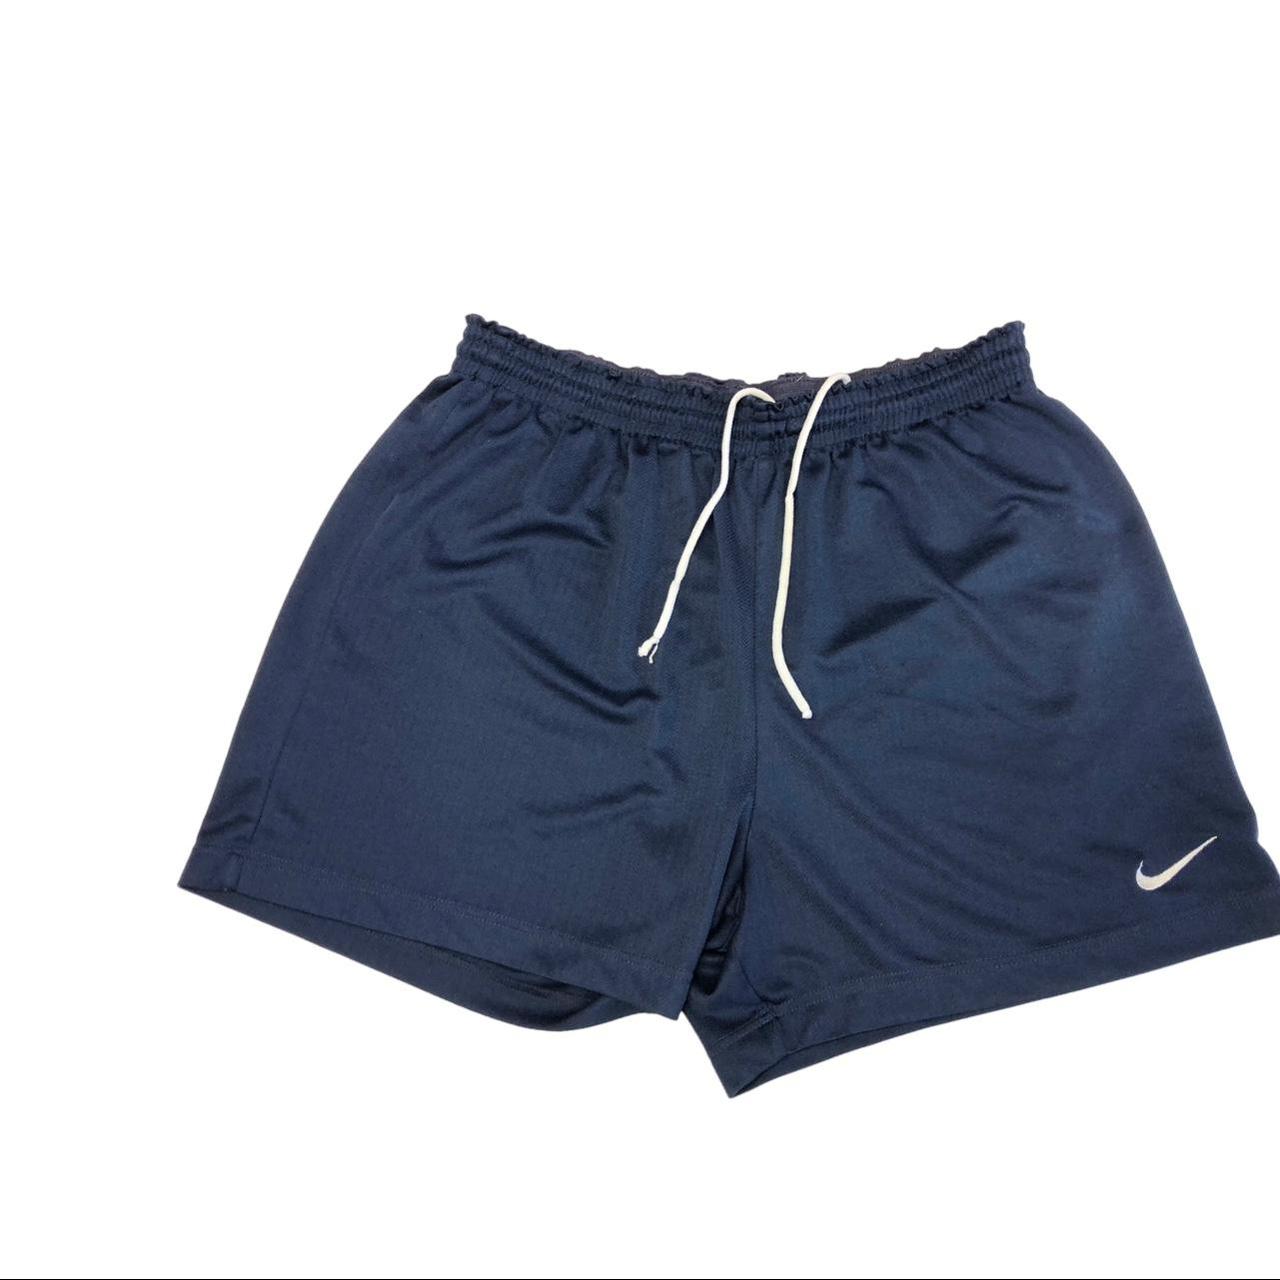 NIKE Large Sports shorts navy Men's Details - draw... - Depop